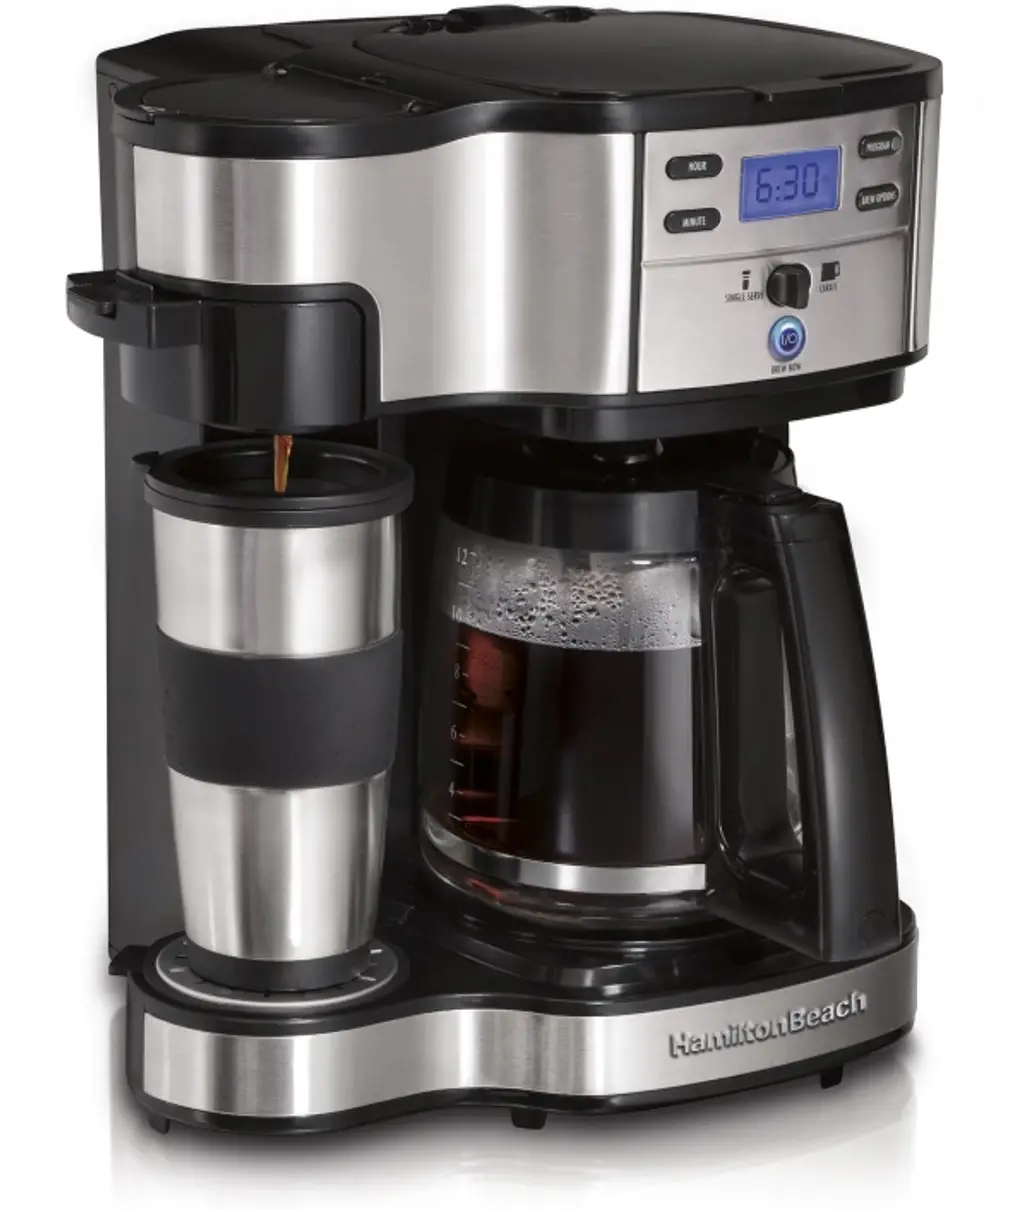 coffeemaker,small appliance,espresso machine,drip coffee maker,kitchen appliance,